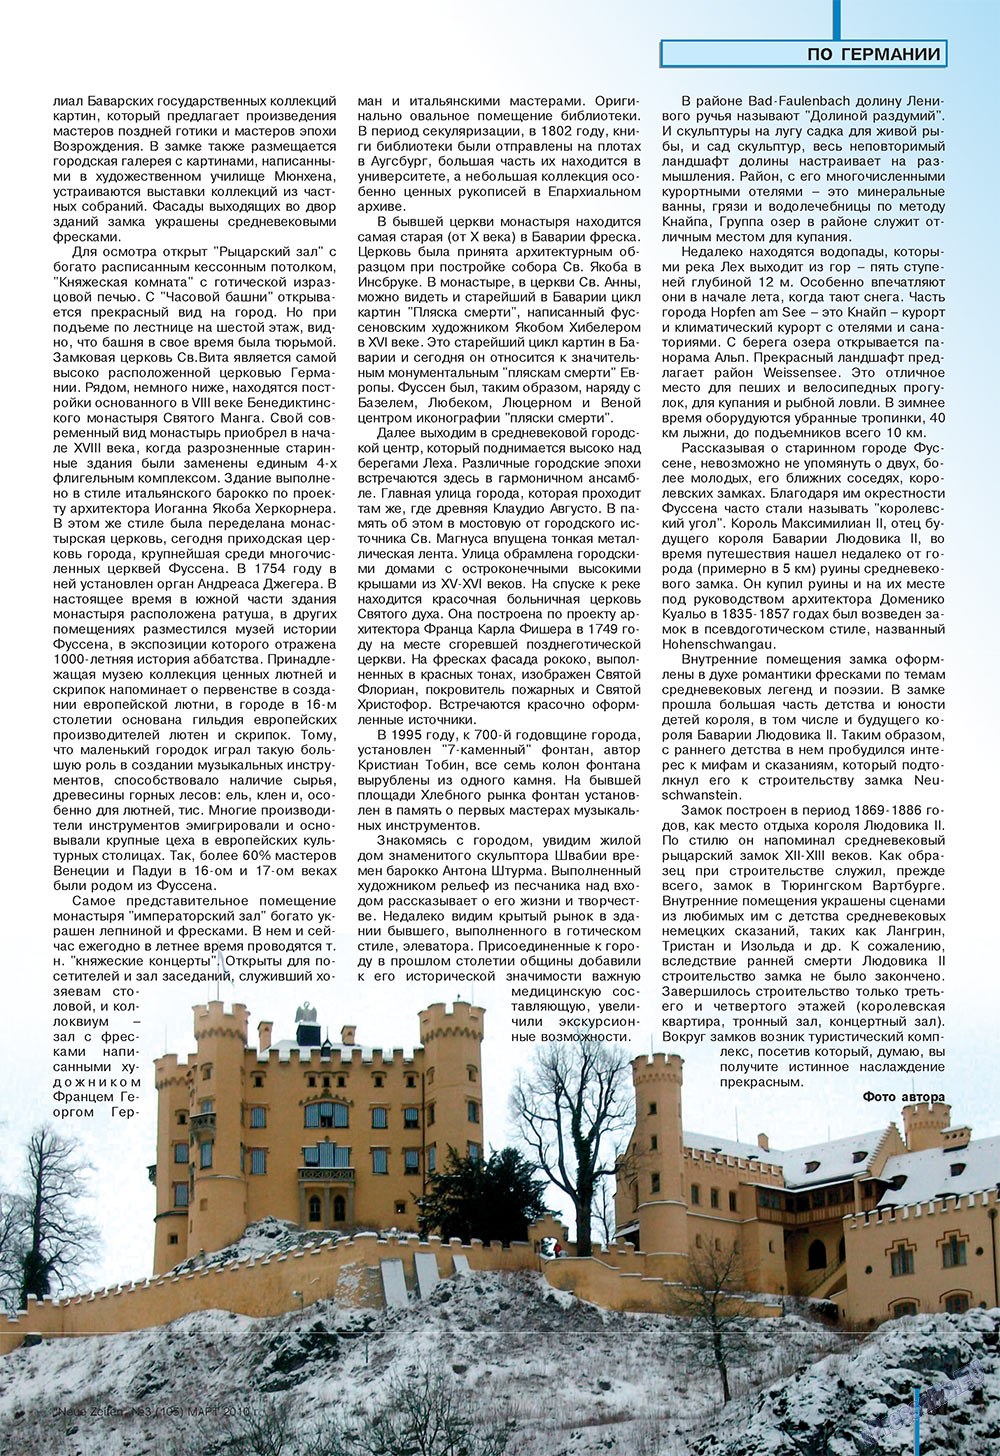 Neue Zeiten (журнал). 2010 год, номер 3, стр. 91